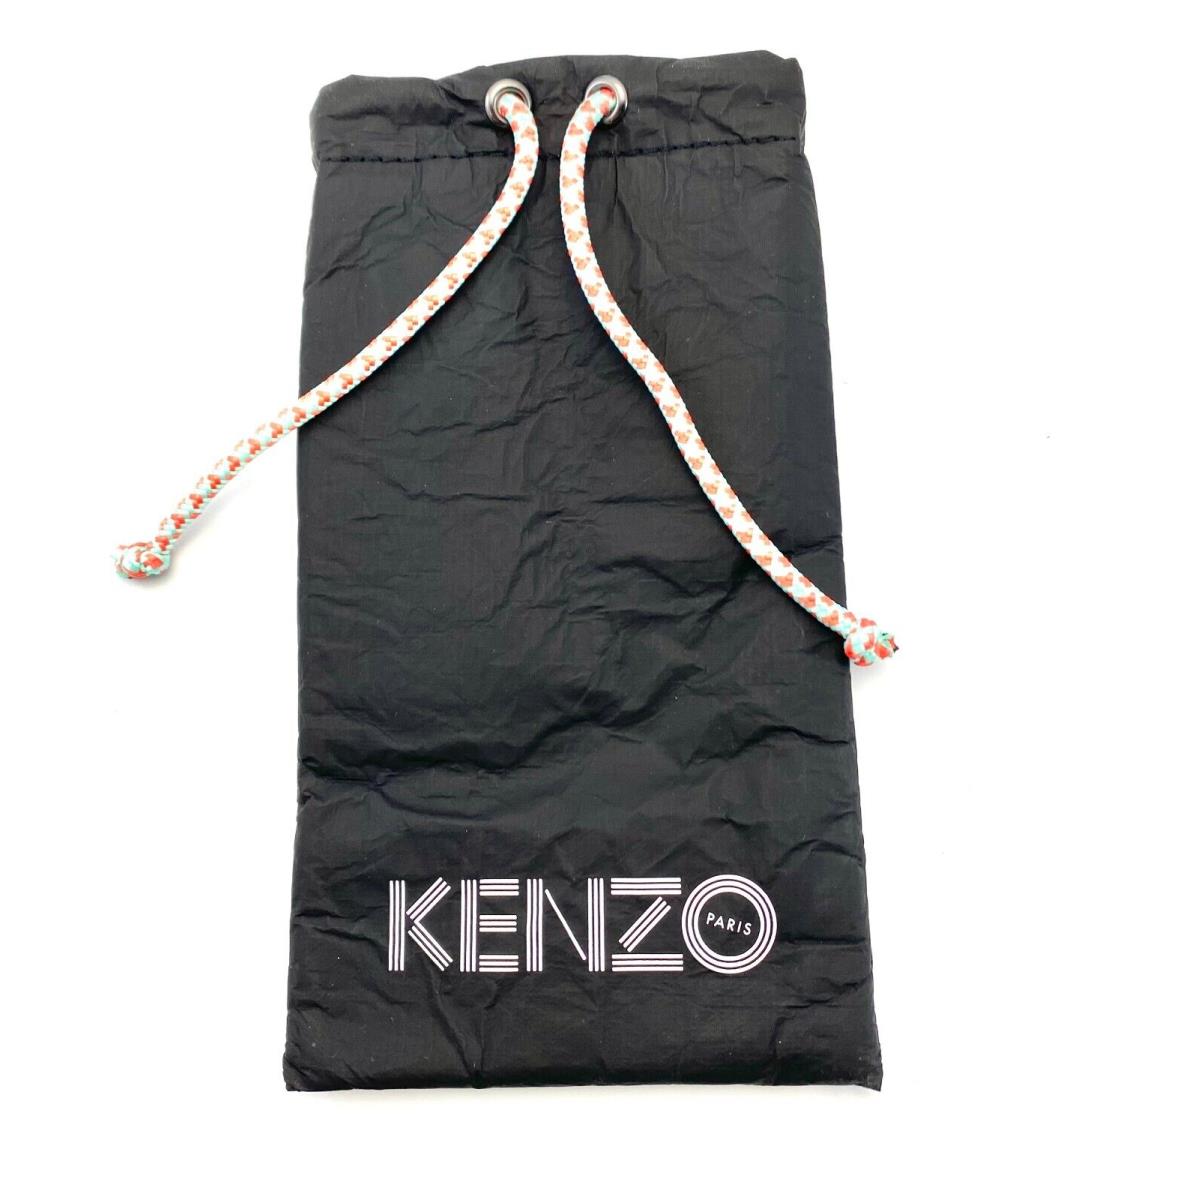 Kenzo sunglasses  - Black Frame, Pink Lens